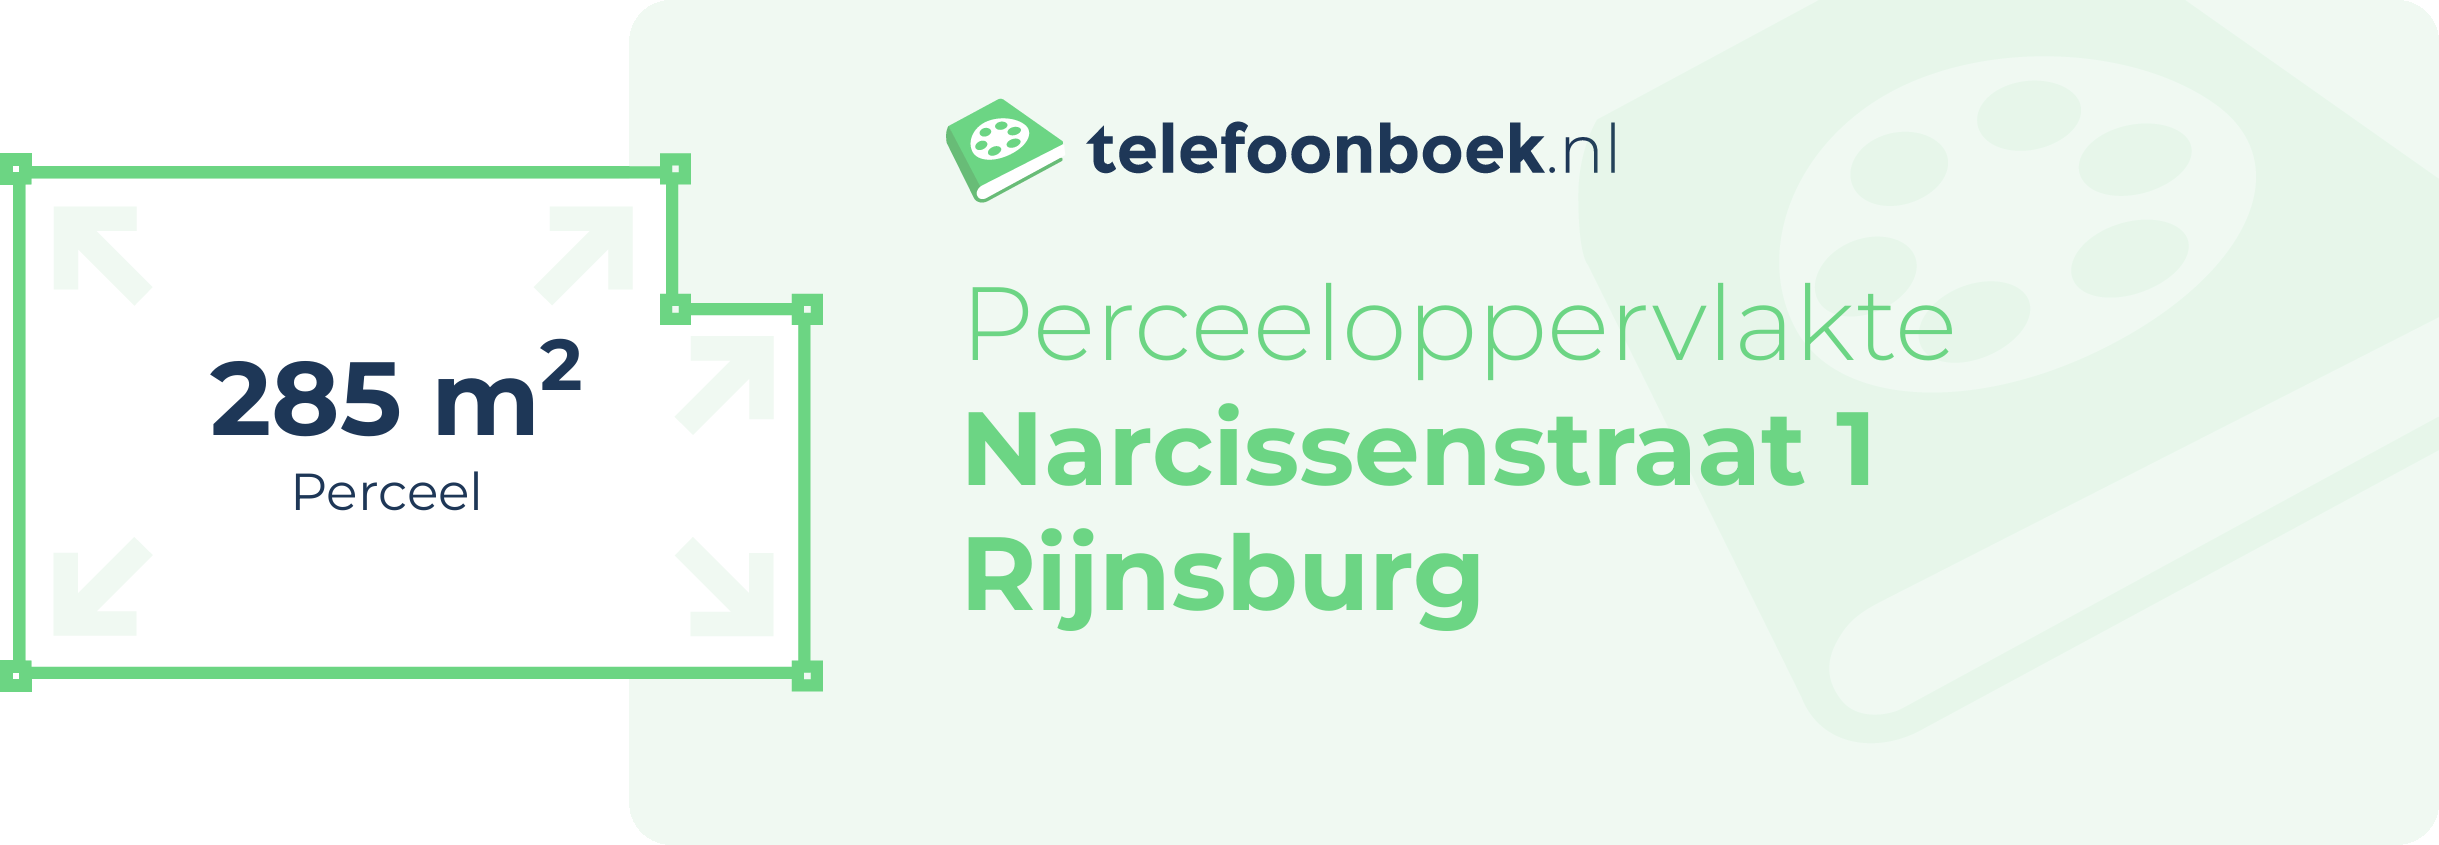 Perceeloppervlakte Narcissenstraat 1 Rijnsburg